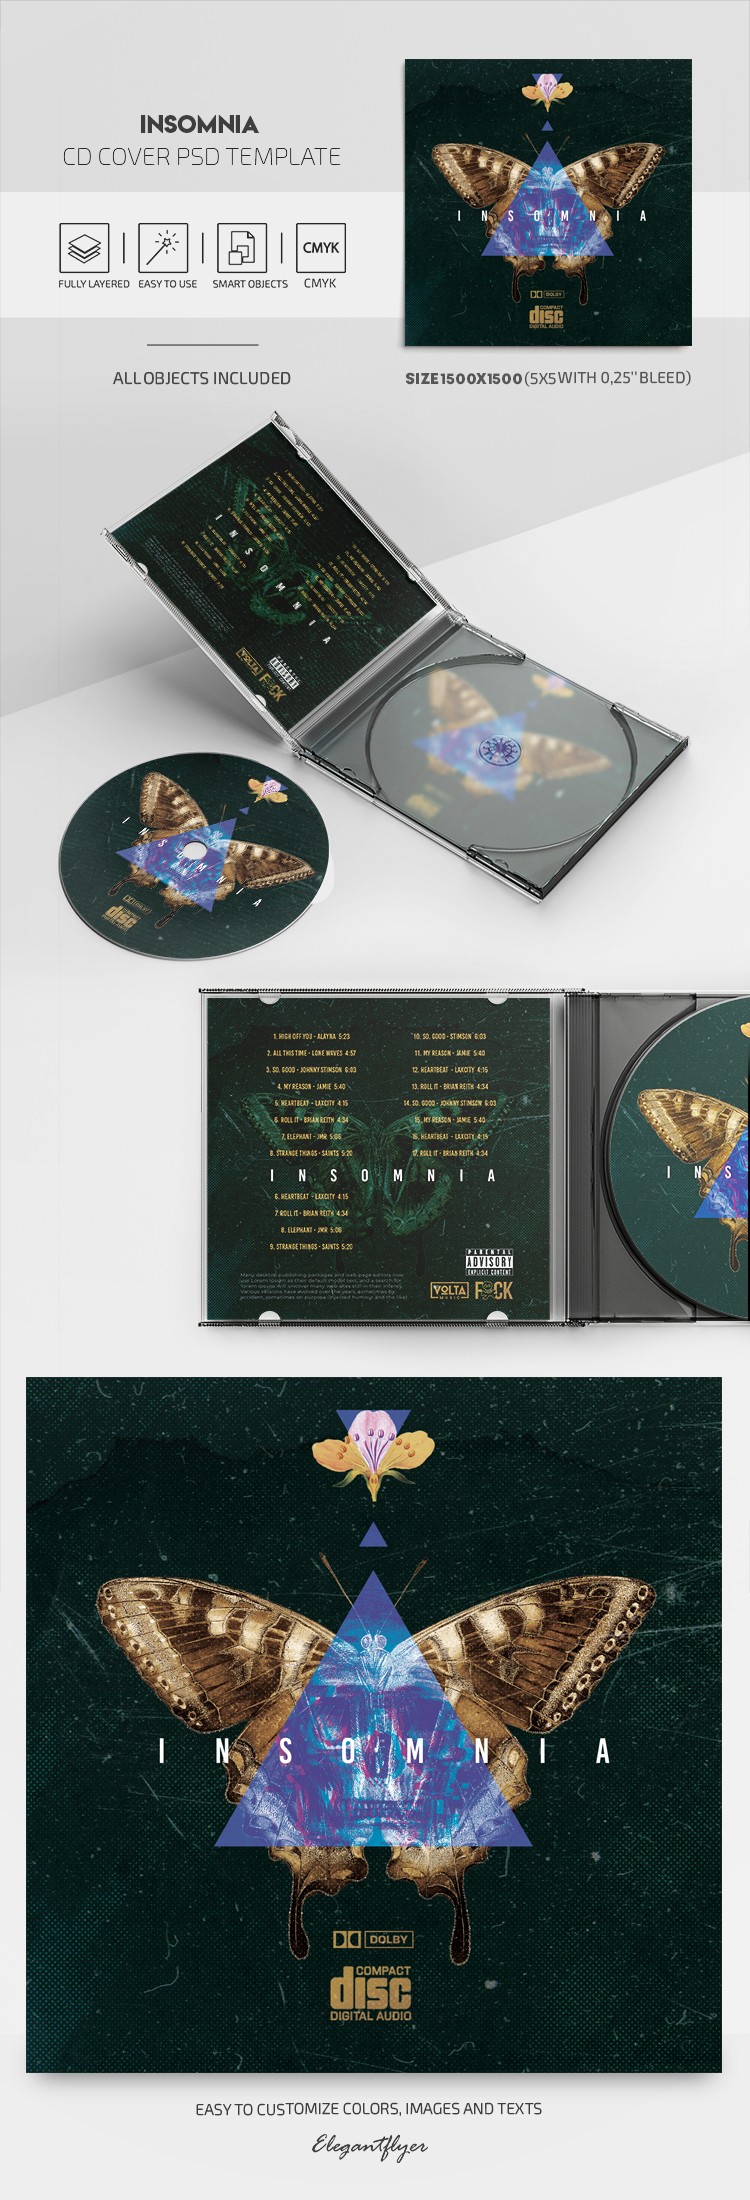 Copertina del CD "Insomnia" by ElegantFlyer